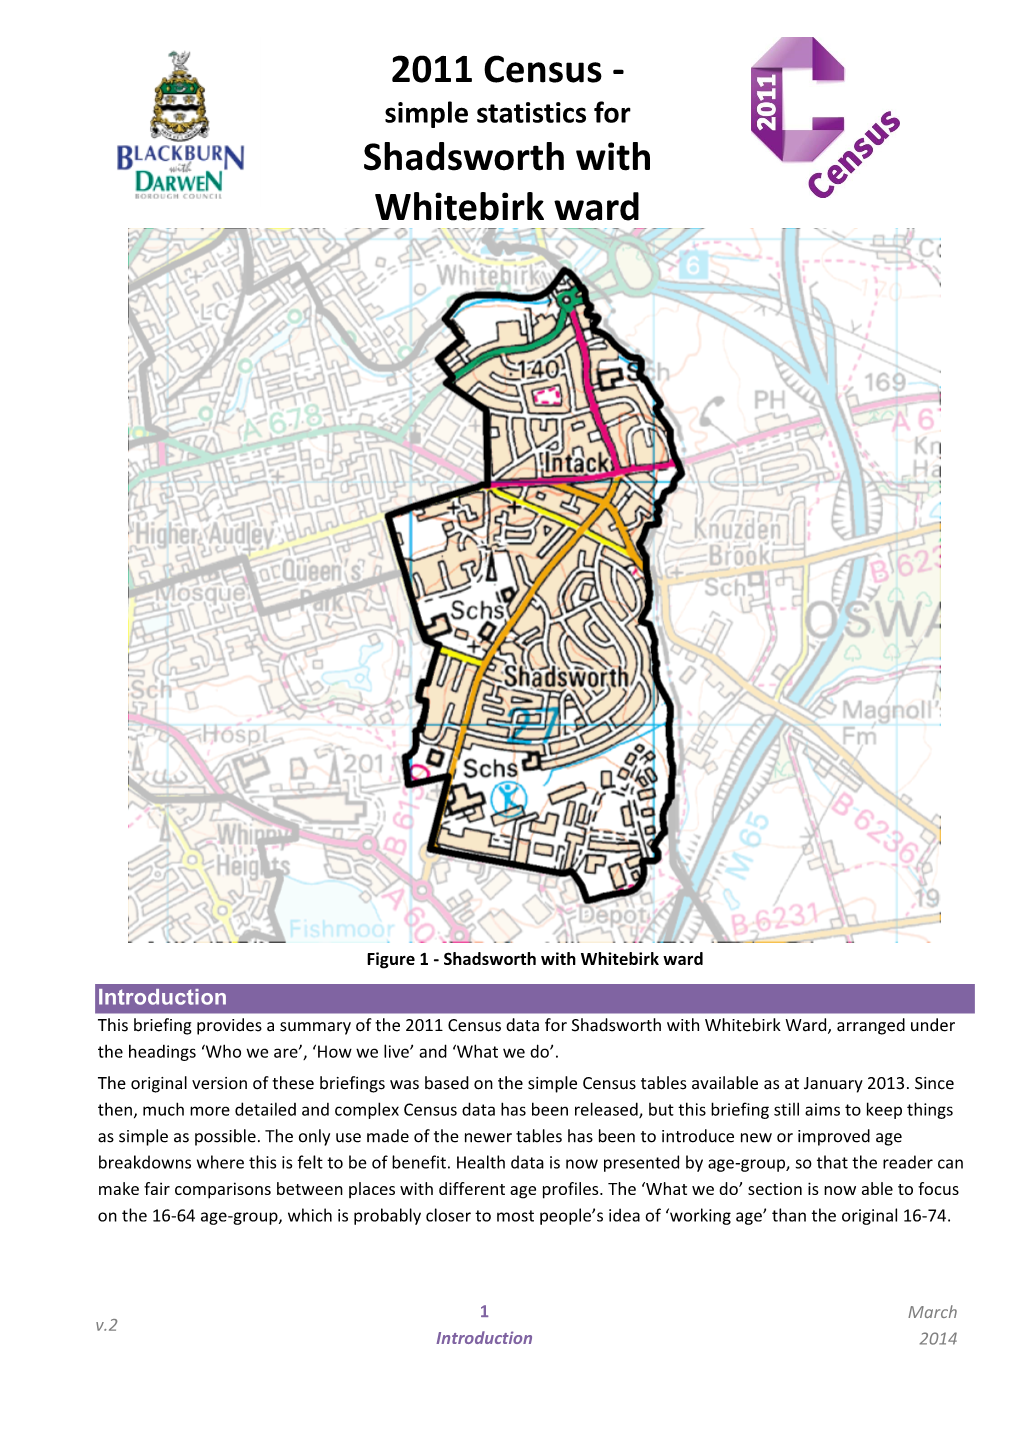 2011 Census - Simple Statistics for Shadsworth with Whitebirk Ward